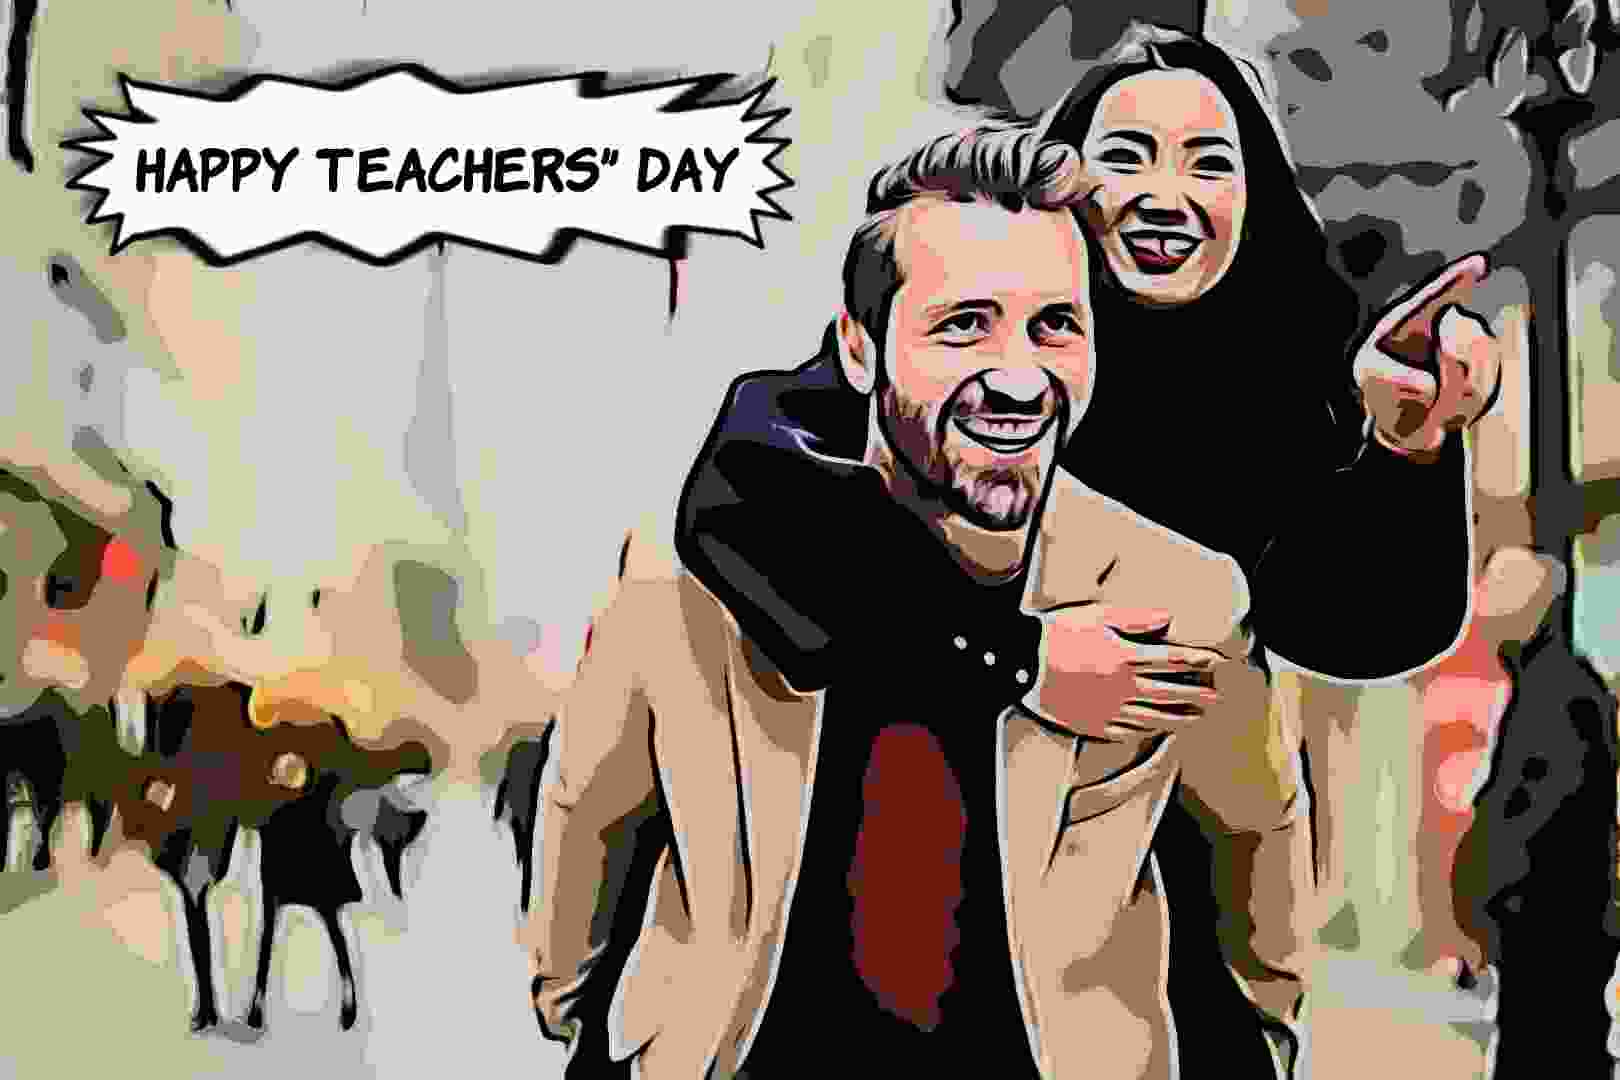 Best Replies To Happy Teachers’ Day 